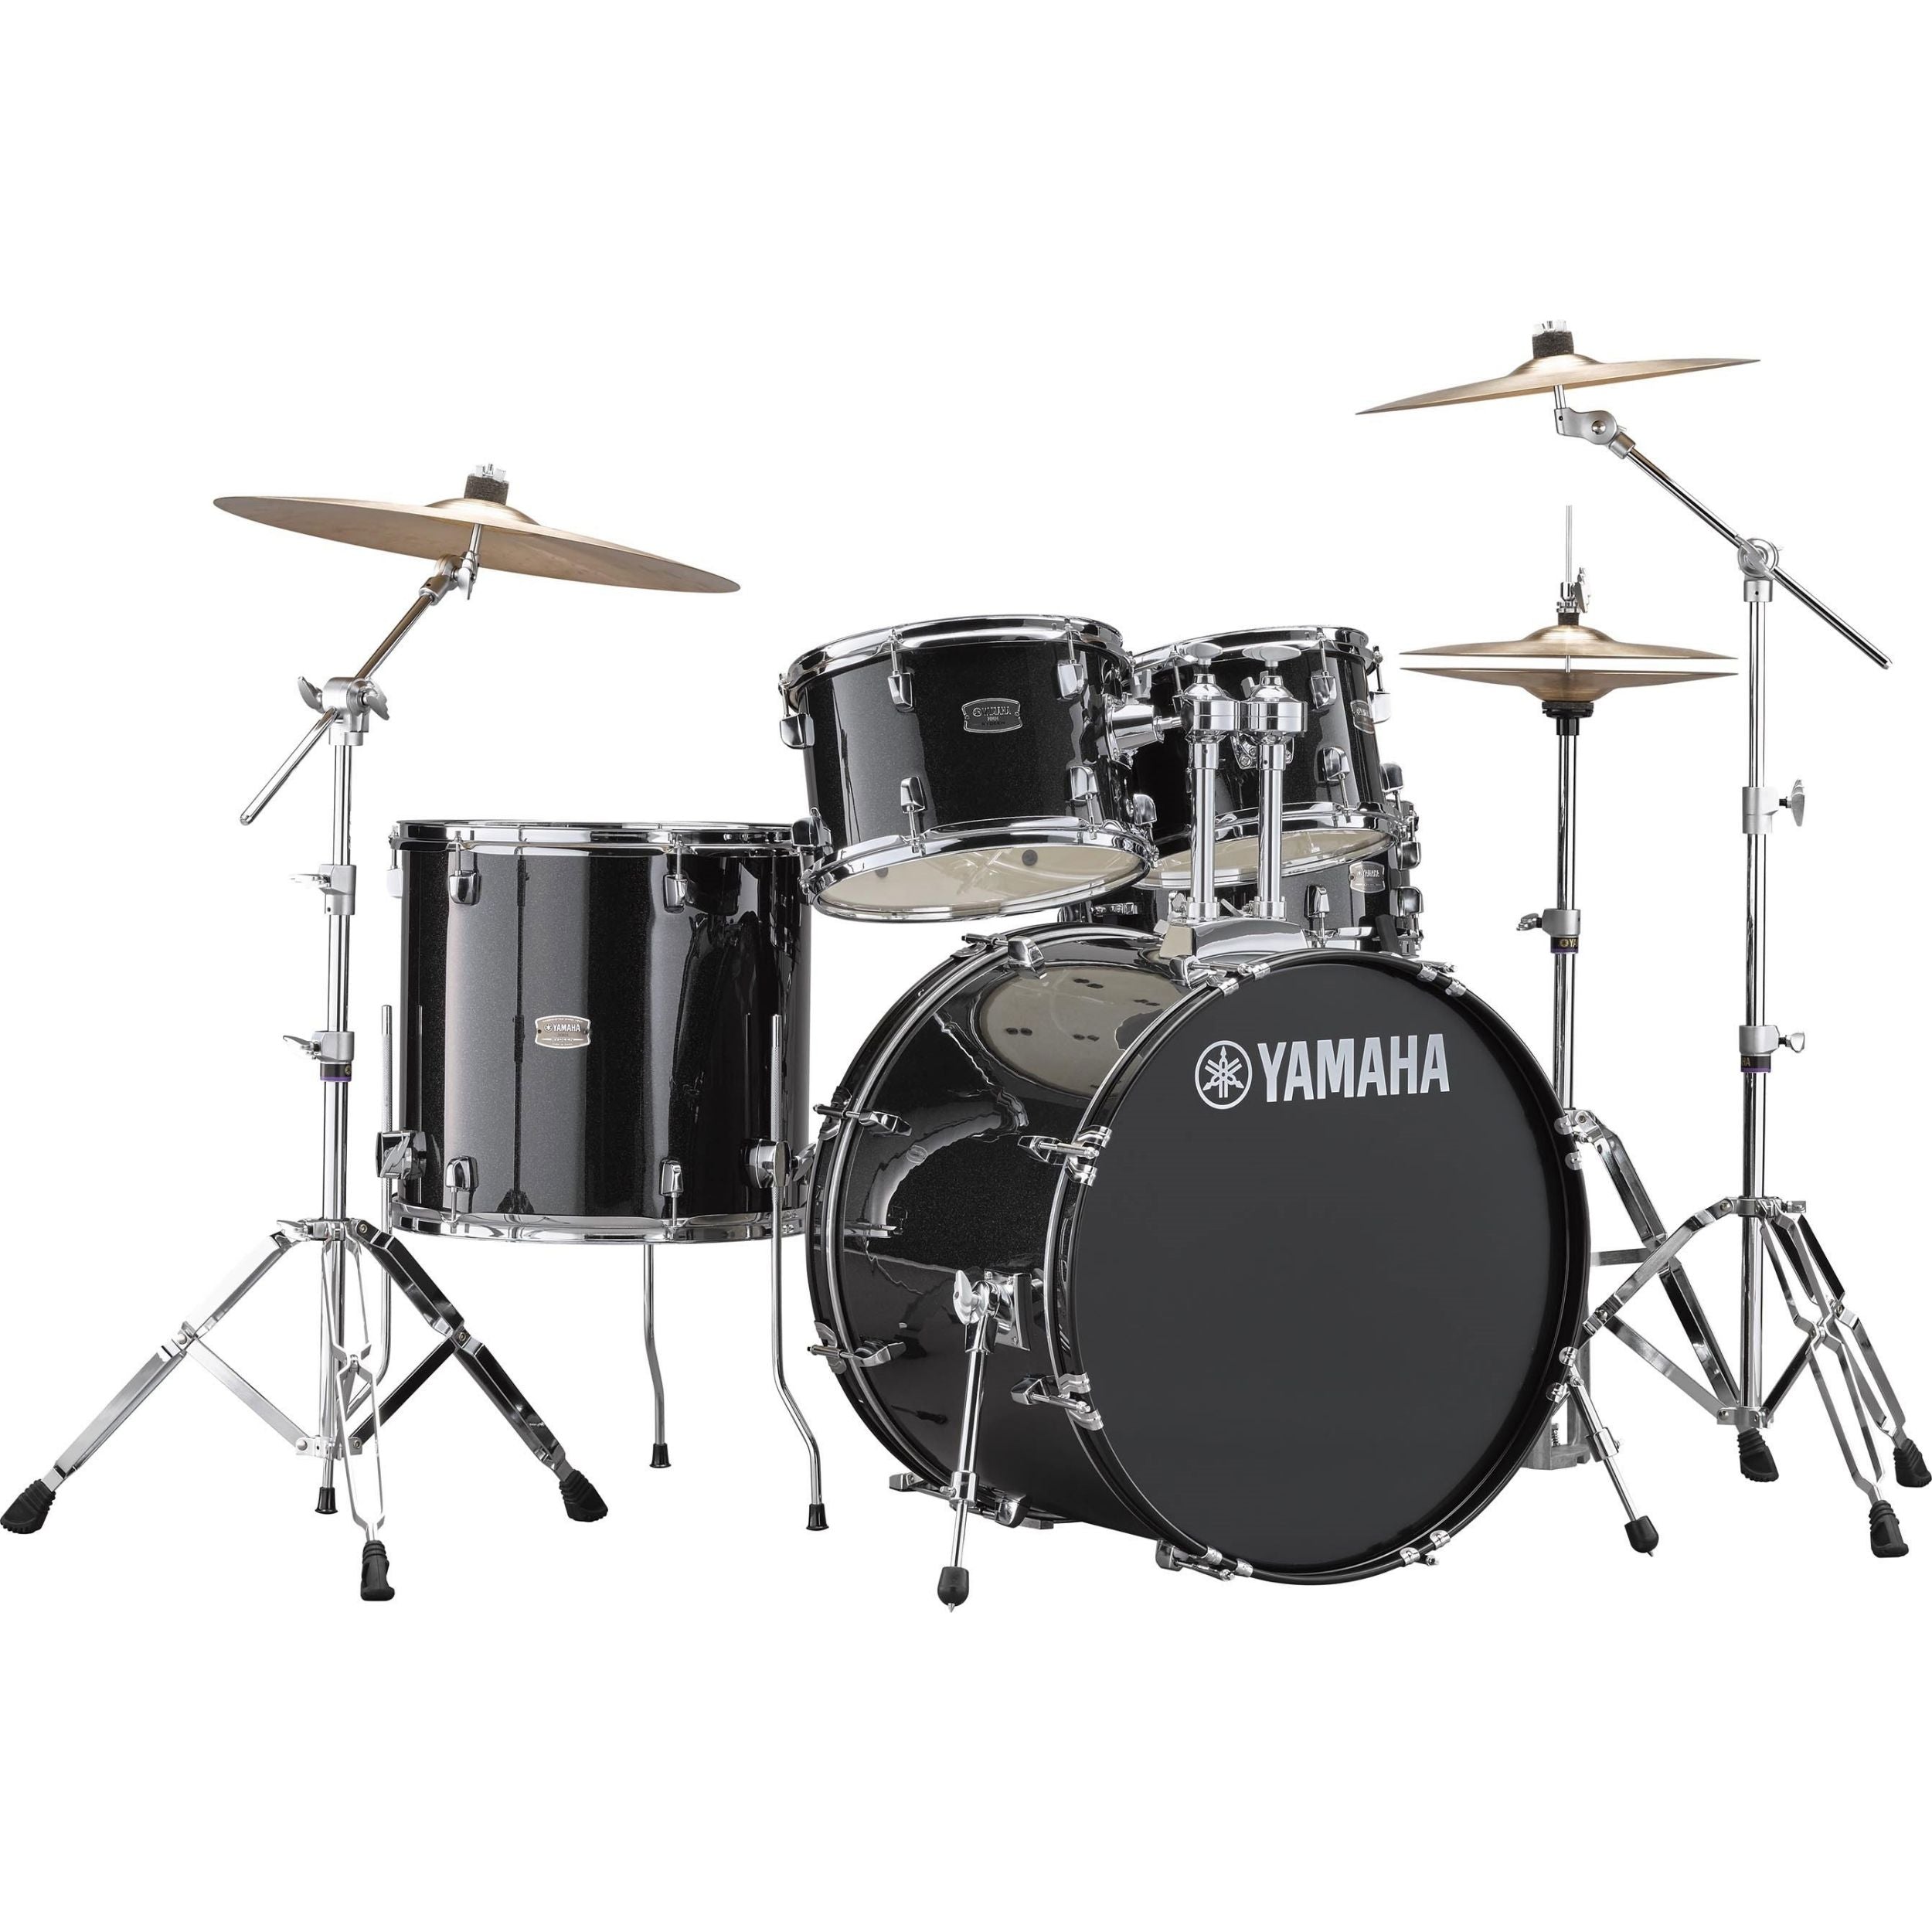 Yamaha RDP2F5BLG Rydeen Euro Drum Kit, Black Glitter with Free Yamaha Stool & Sticks